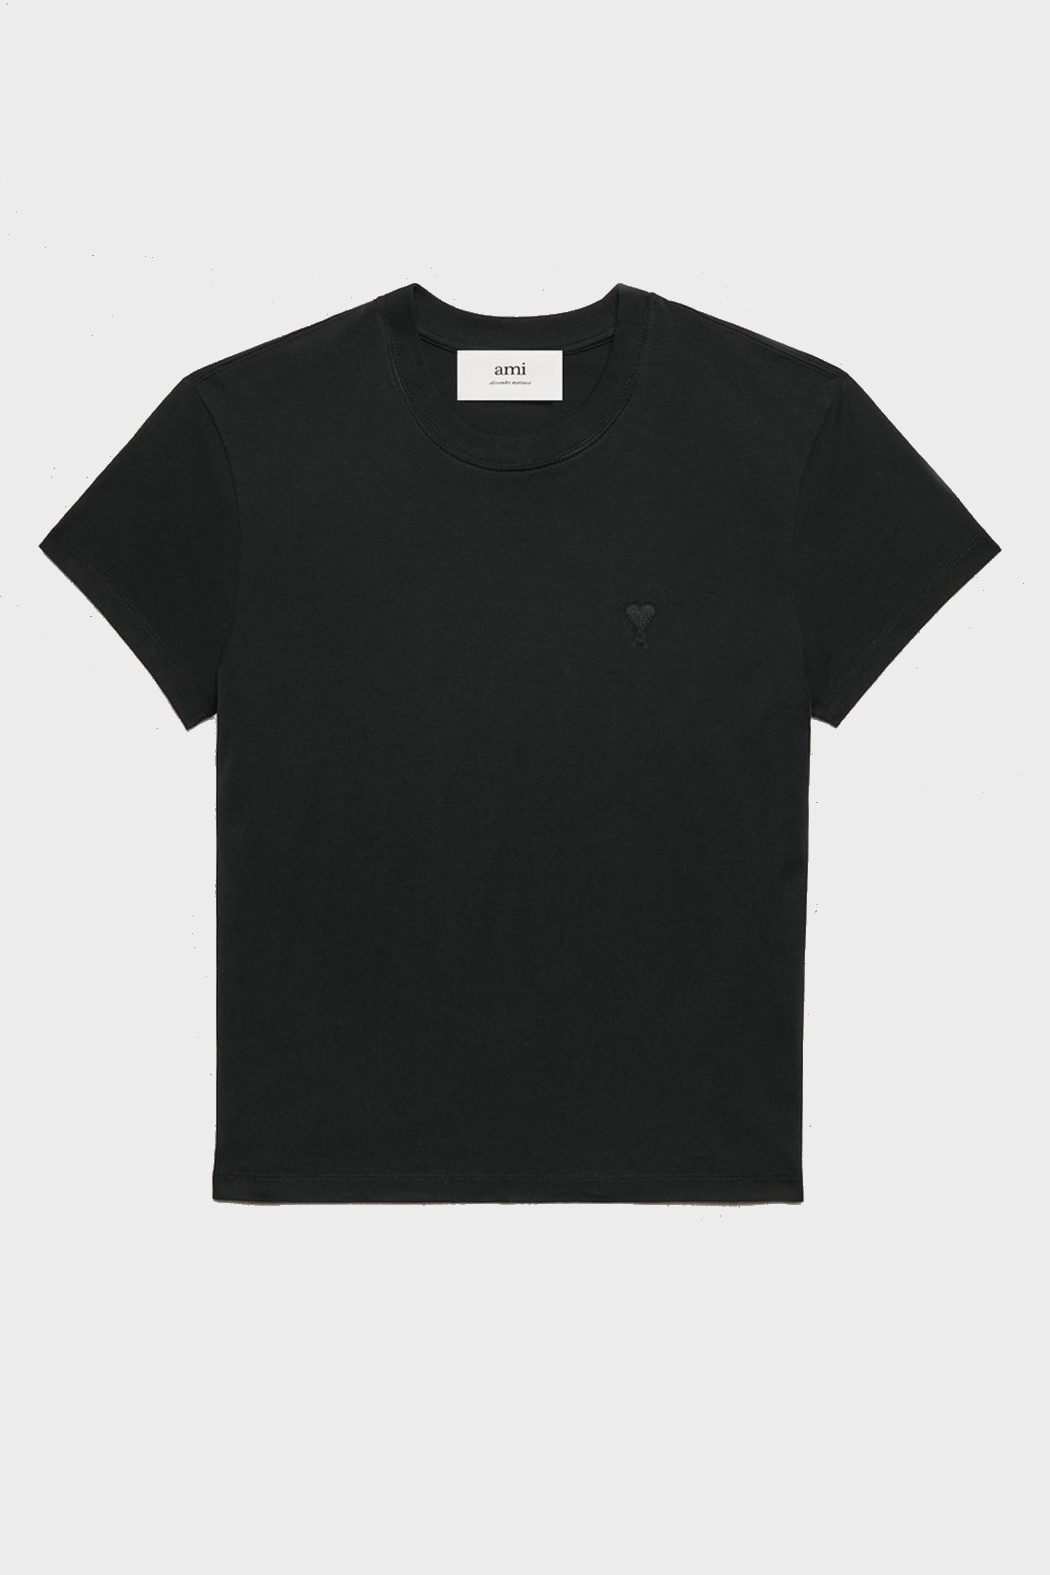 AMI PARIS de Coeur T-Shirt in Black L